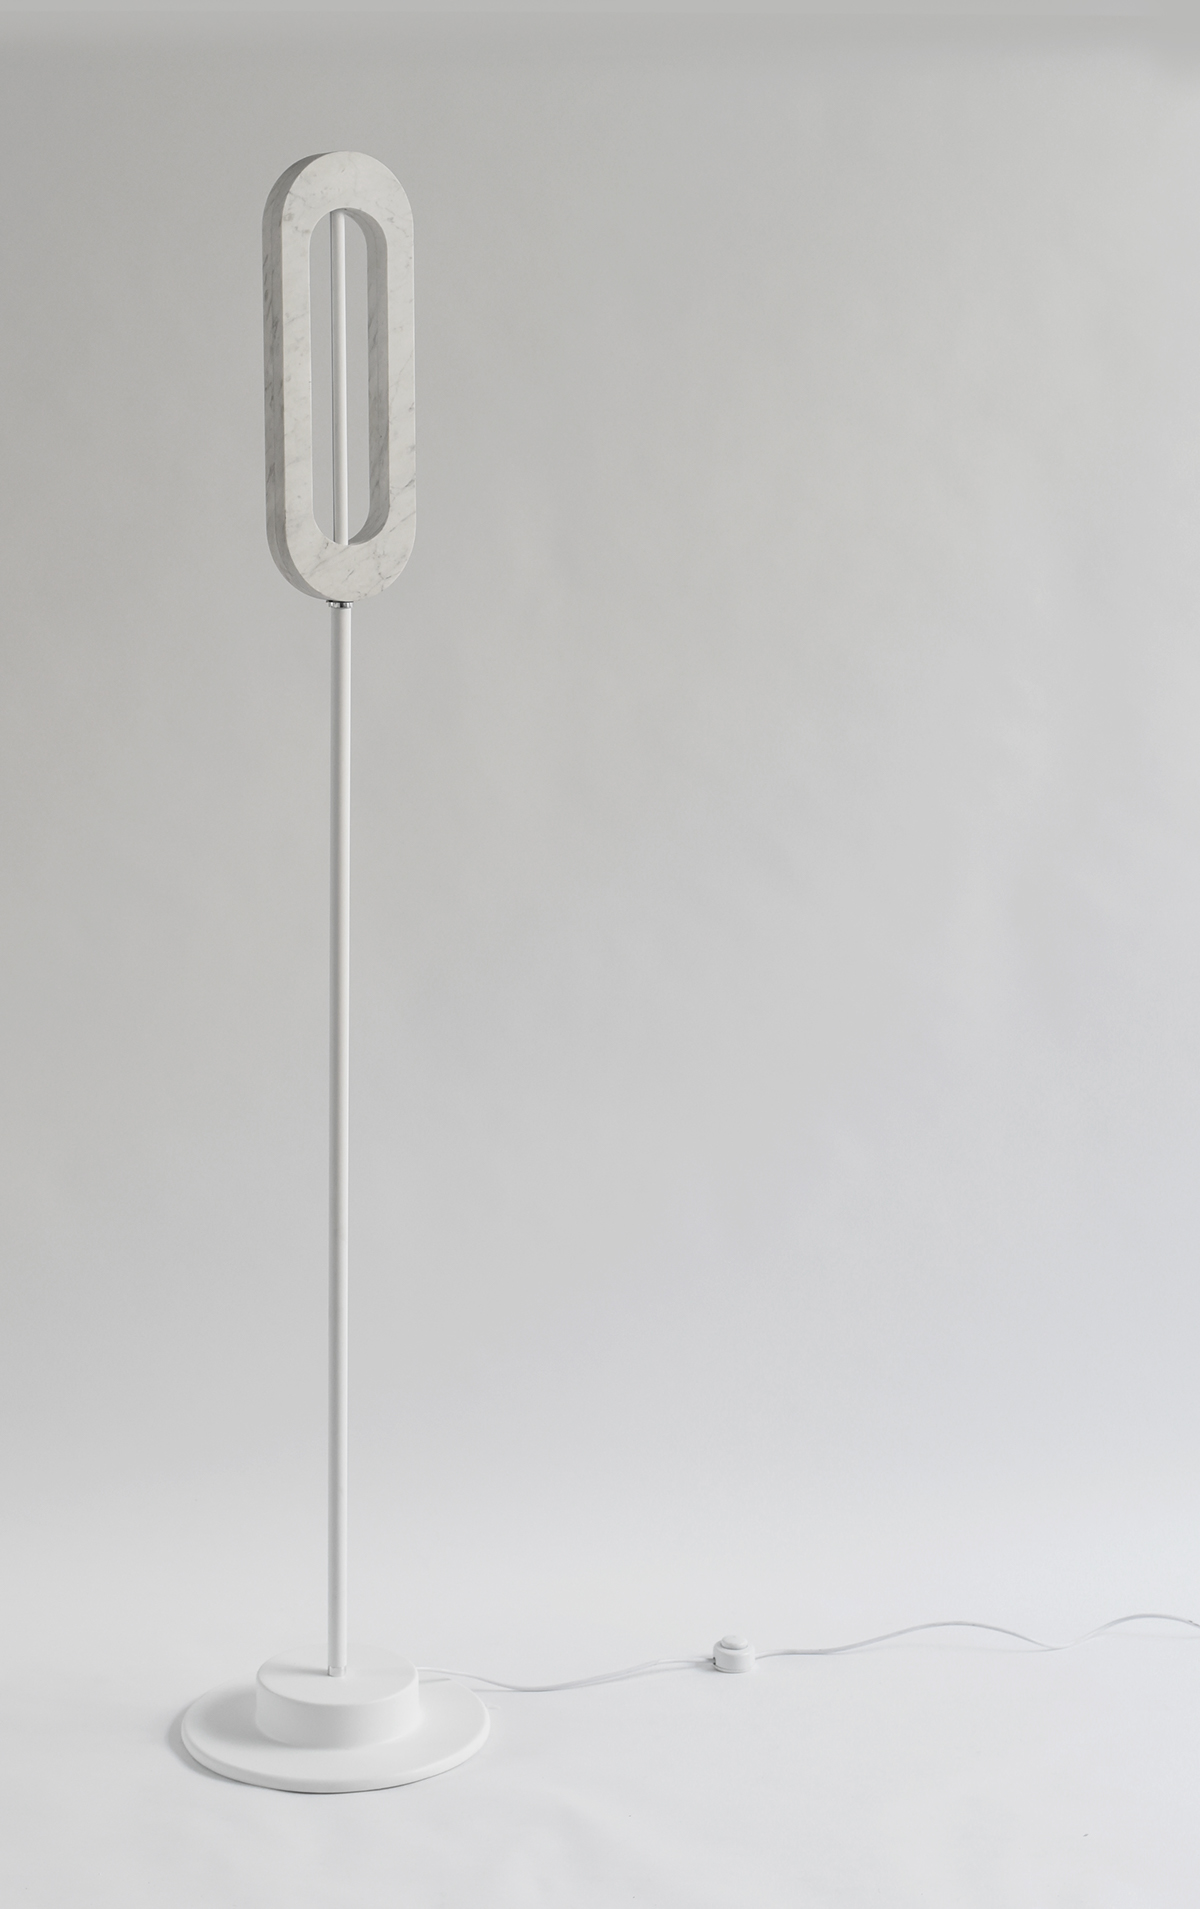 Lamp light Marble product decor interiorism White furniture industrialdesign